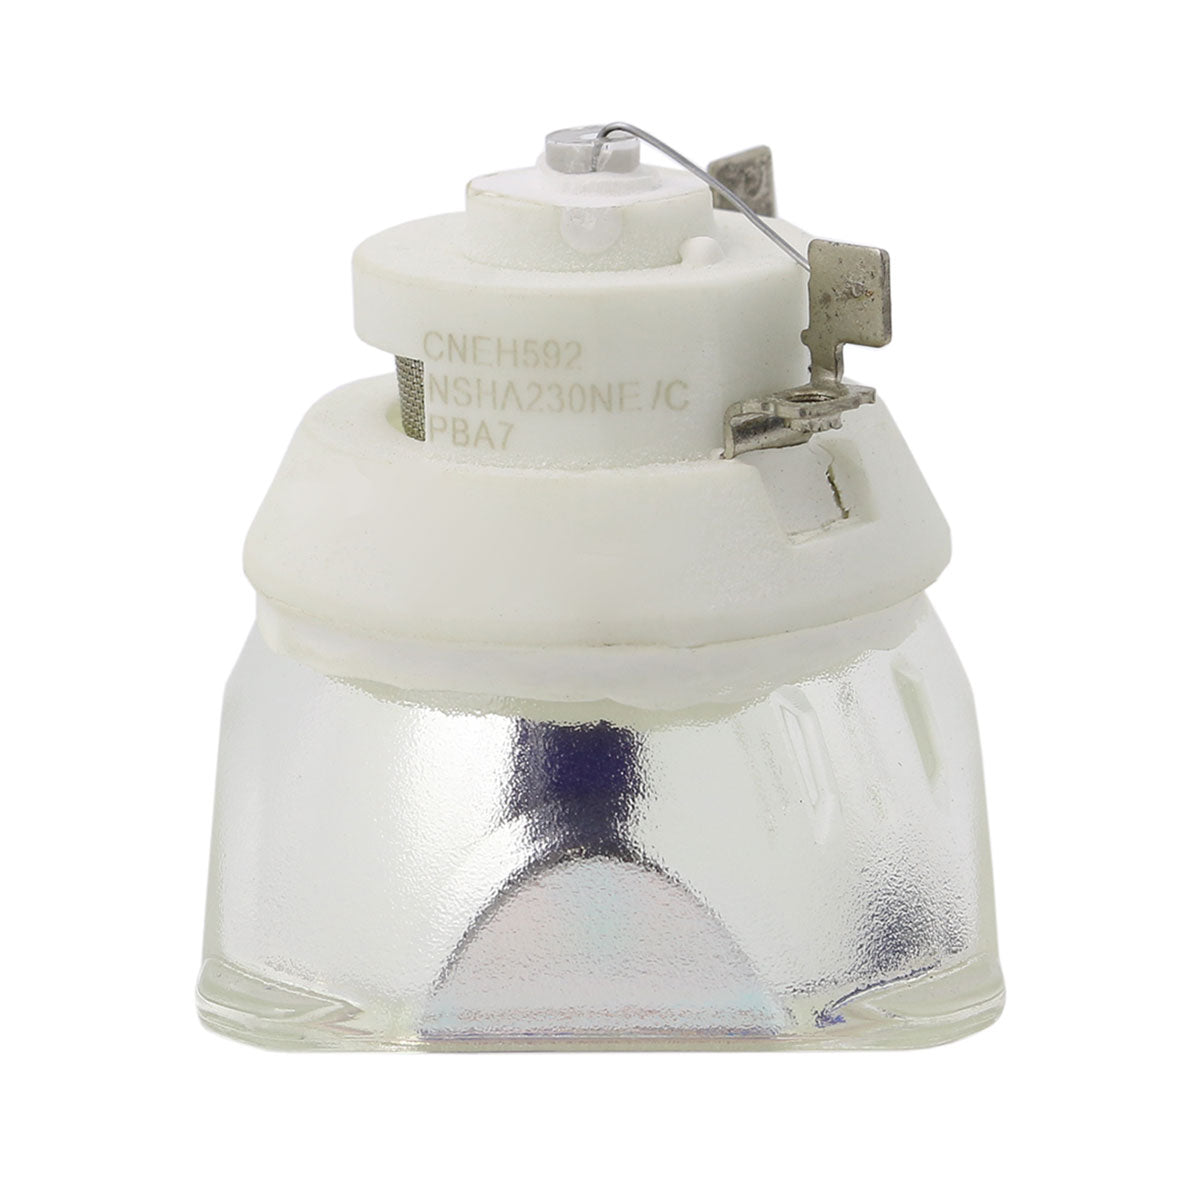 Dukane 456-8931WA Ushio Projector Bare Lamp